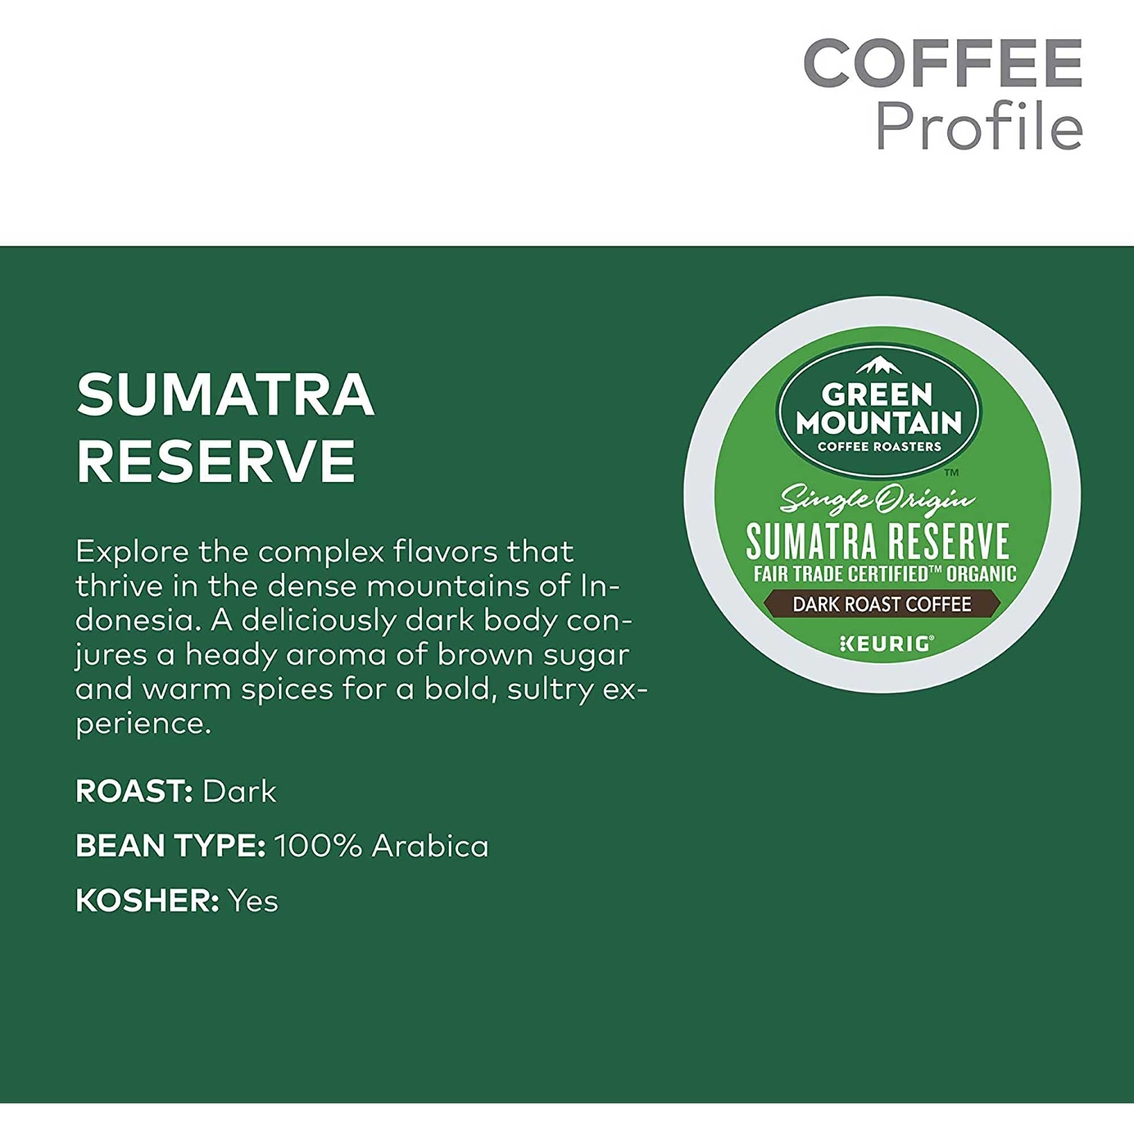 Keurig Green Mountain Coffee Roasters Sumatra Reserve 24 pk. - Image 3 of 4